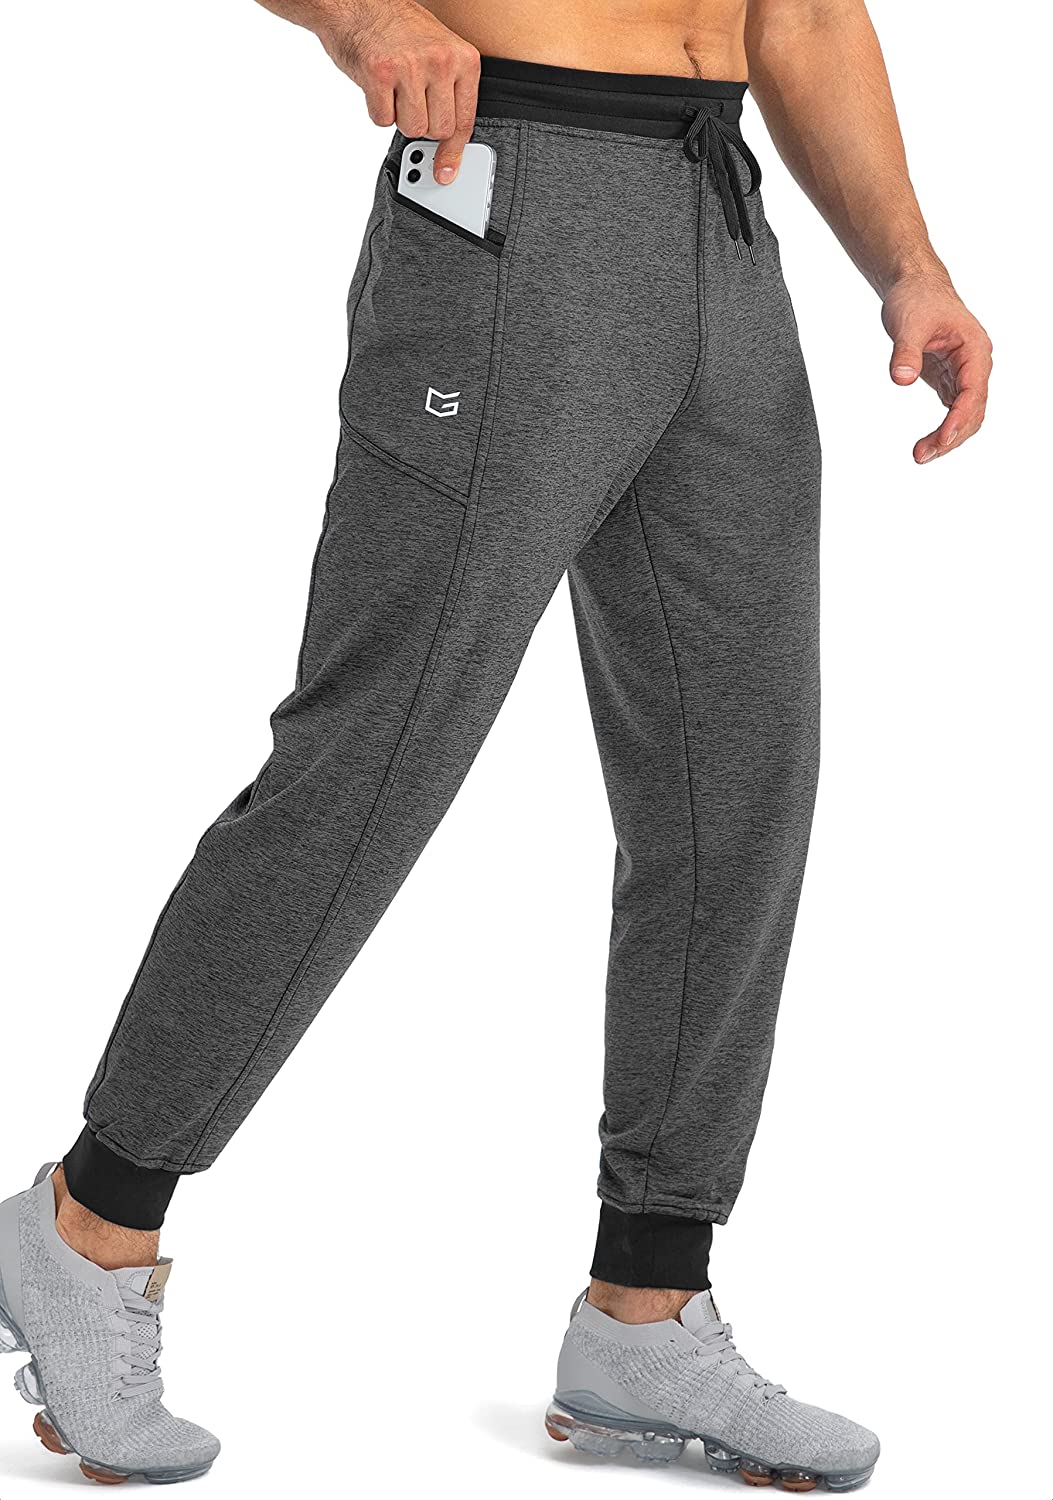  G Gradual Men's Sweatpants Open Bottom, Workout Pants